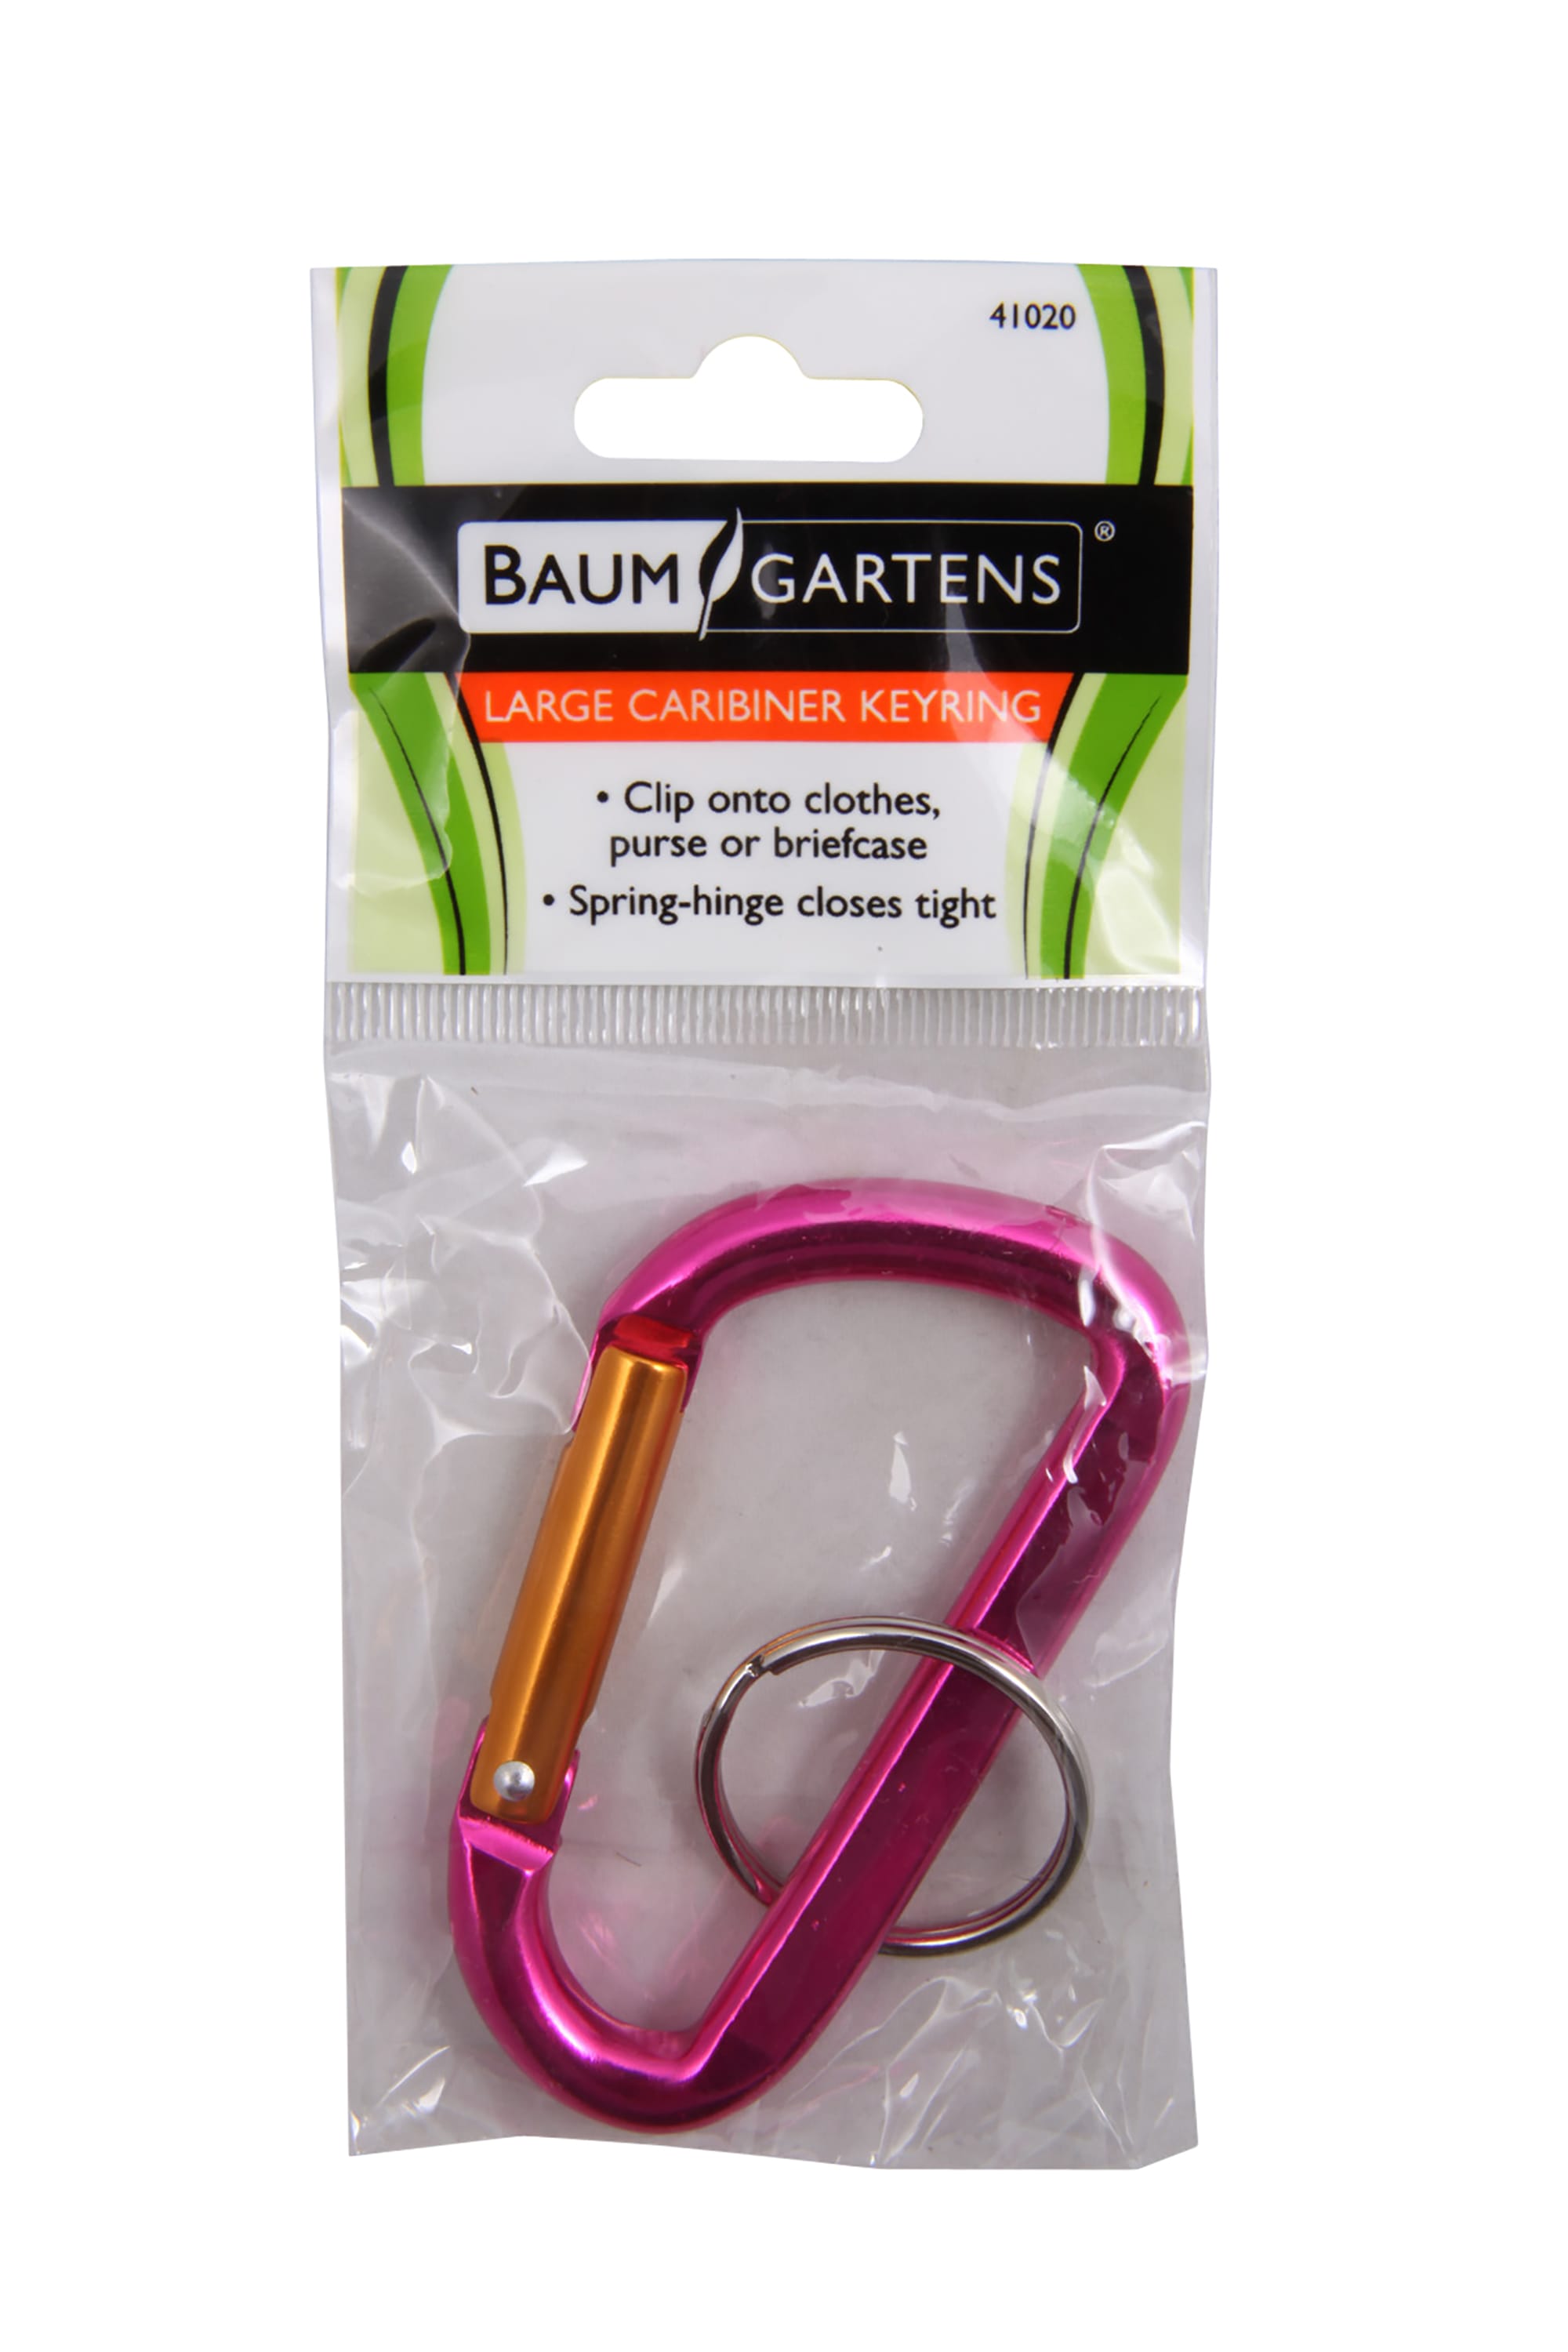 Baumgartens Caribiner Keychain Large Size ASSORTED Colors (41020)